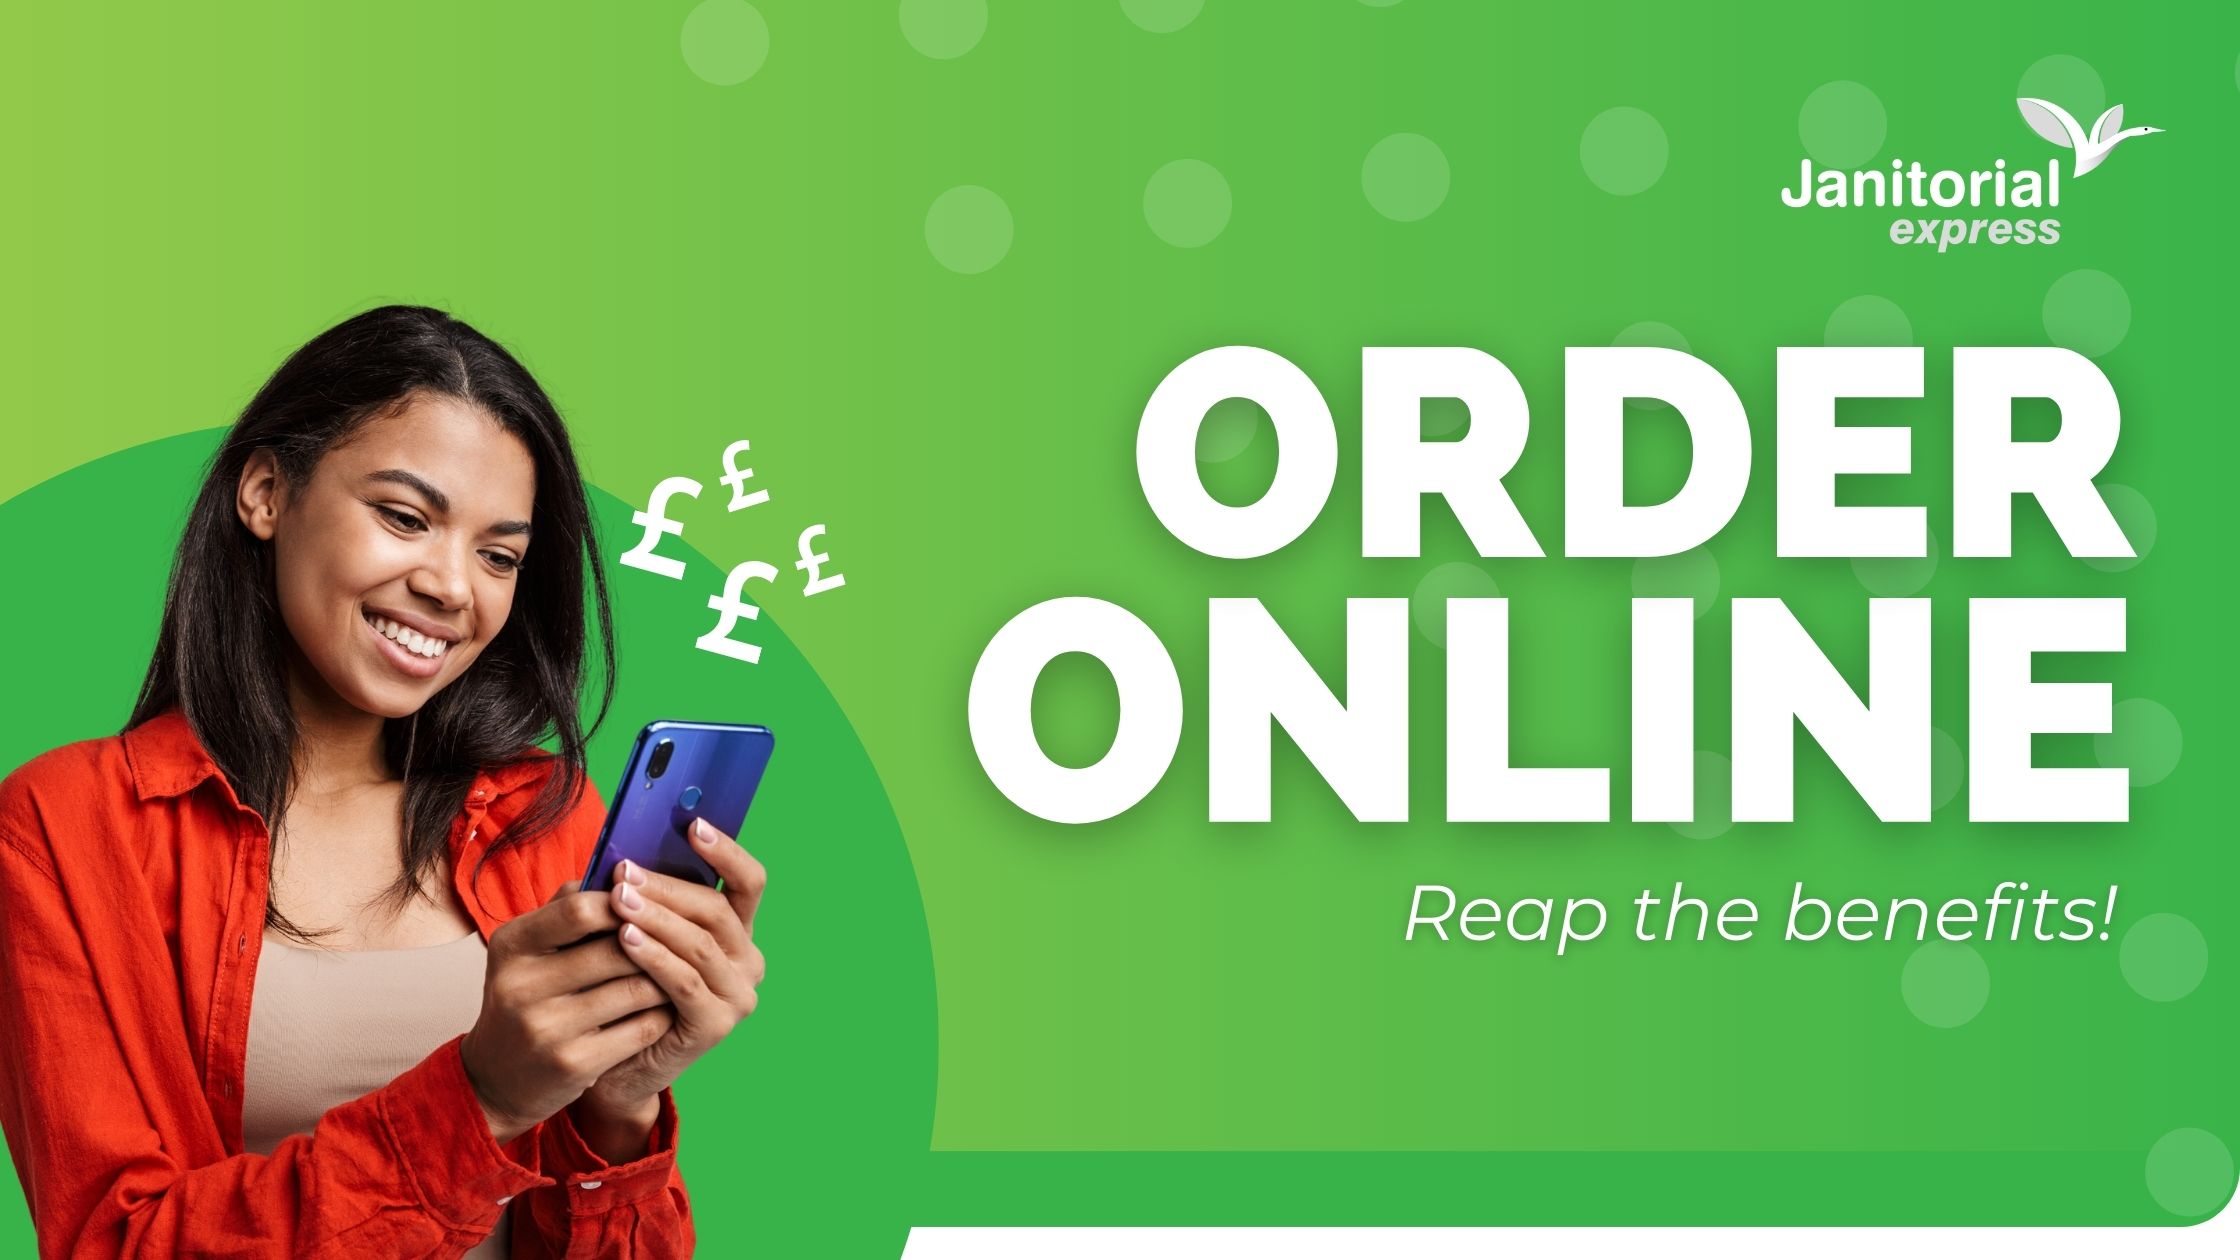 Lady on mobile - order online